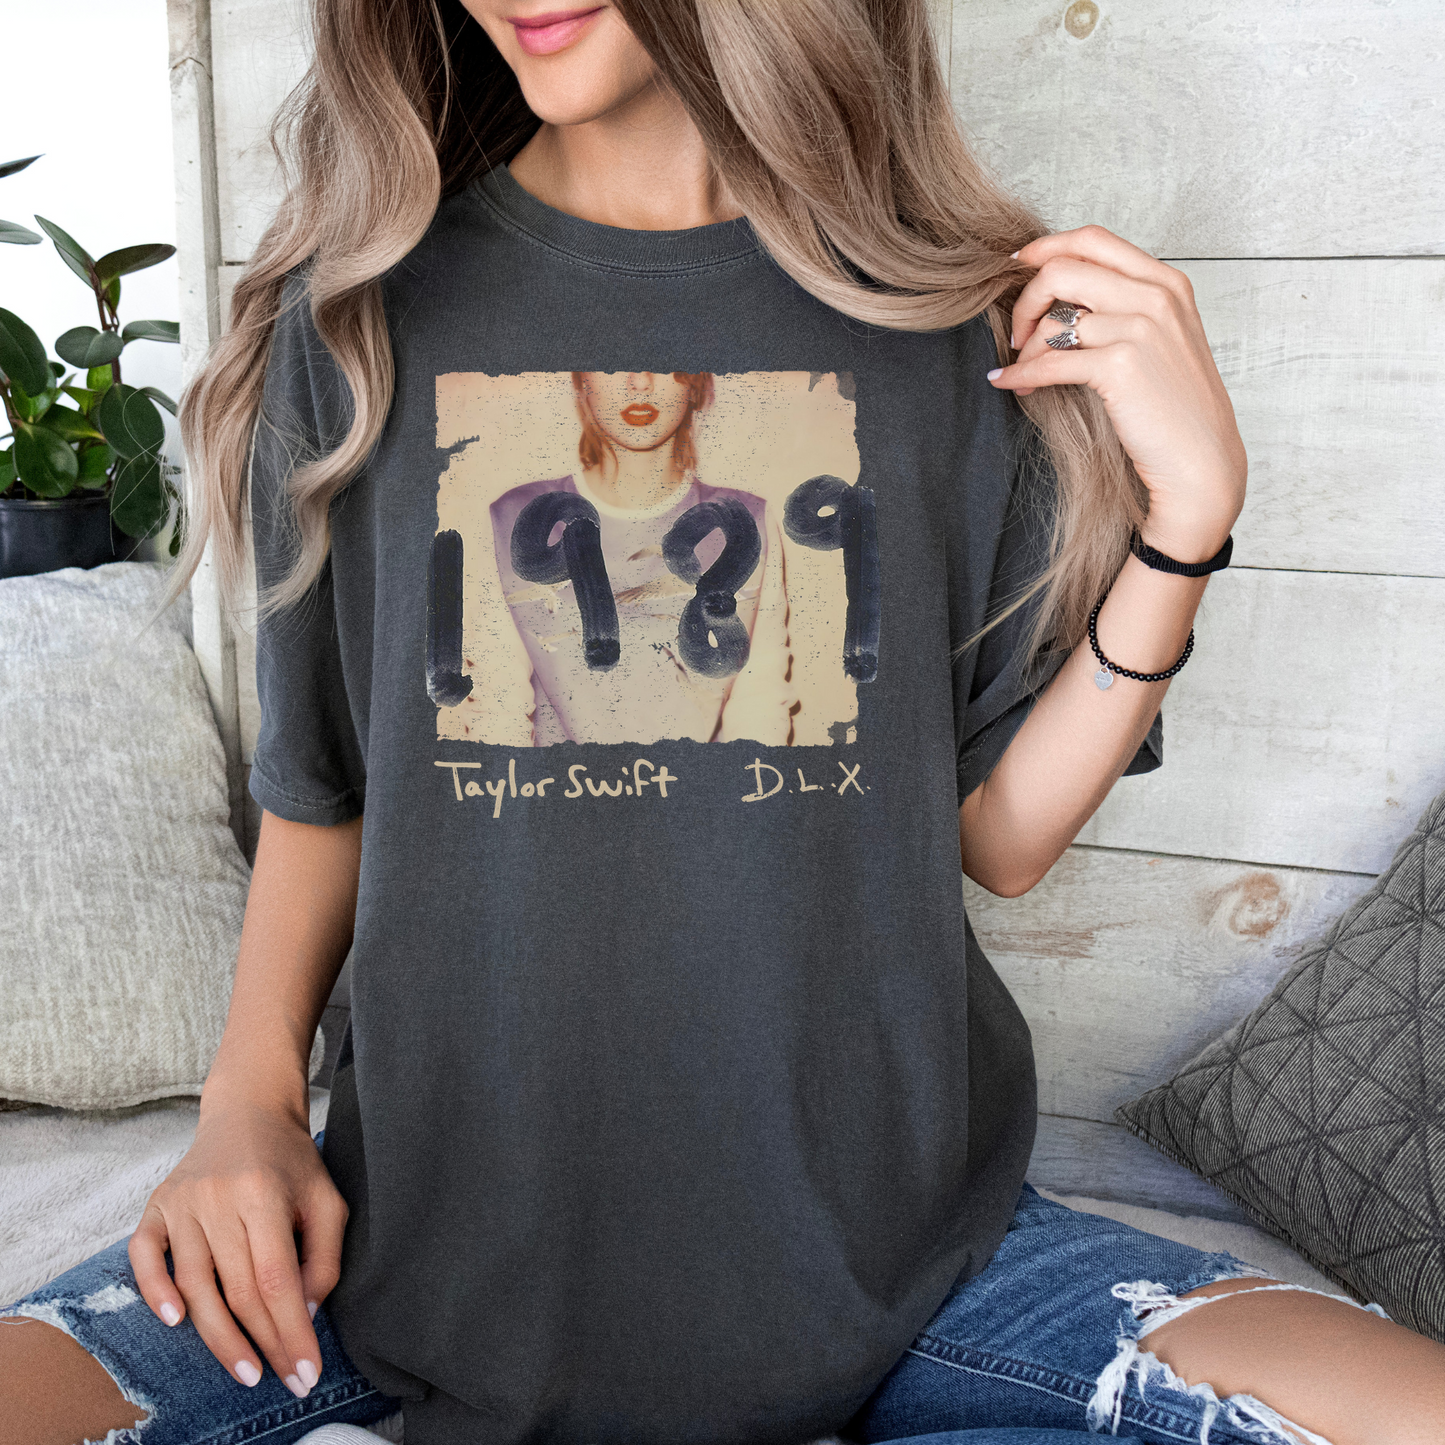 T Swift inspired t-shirt | Adult T-shirt